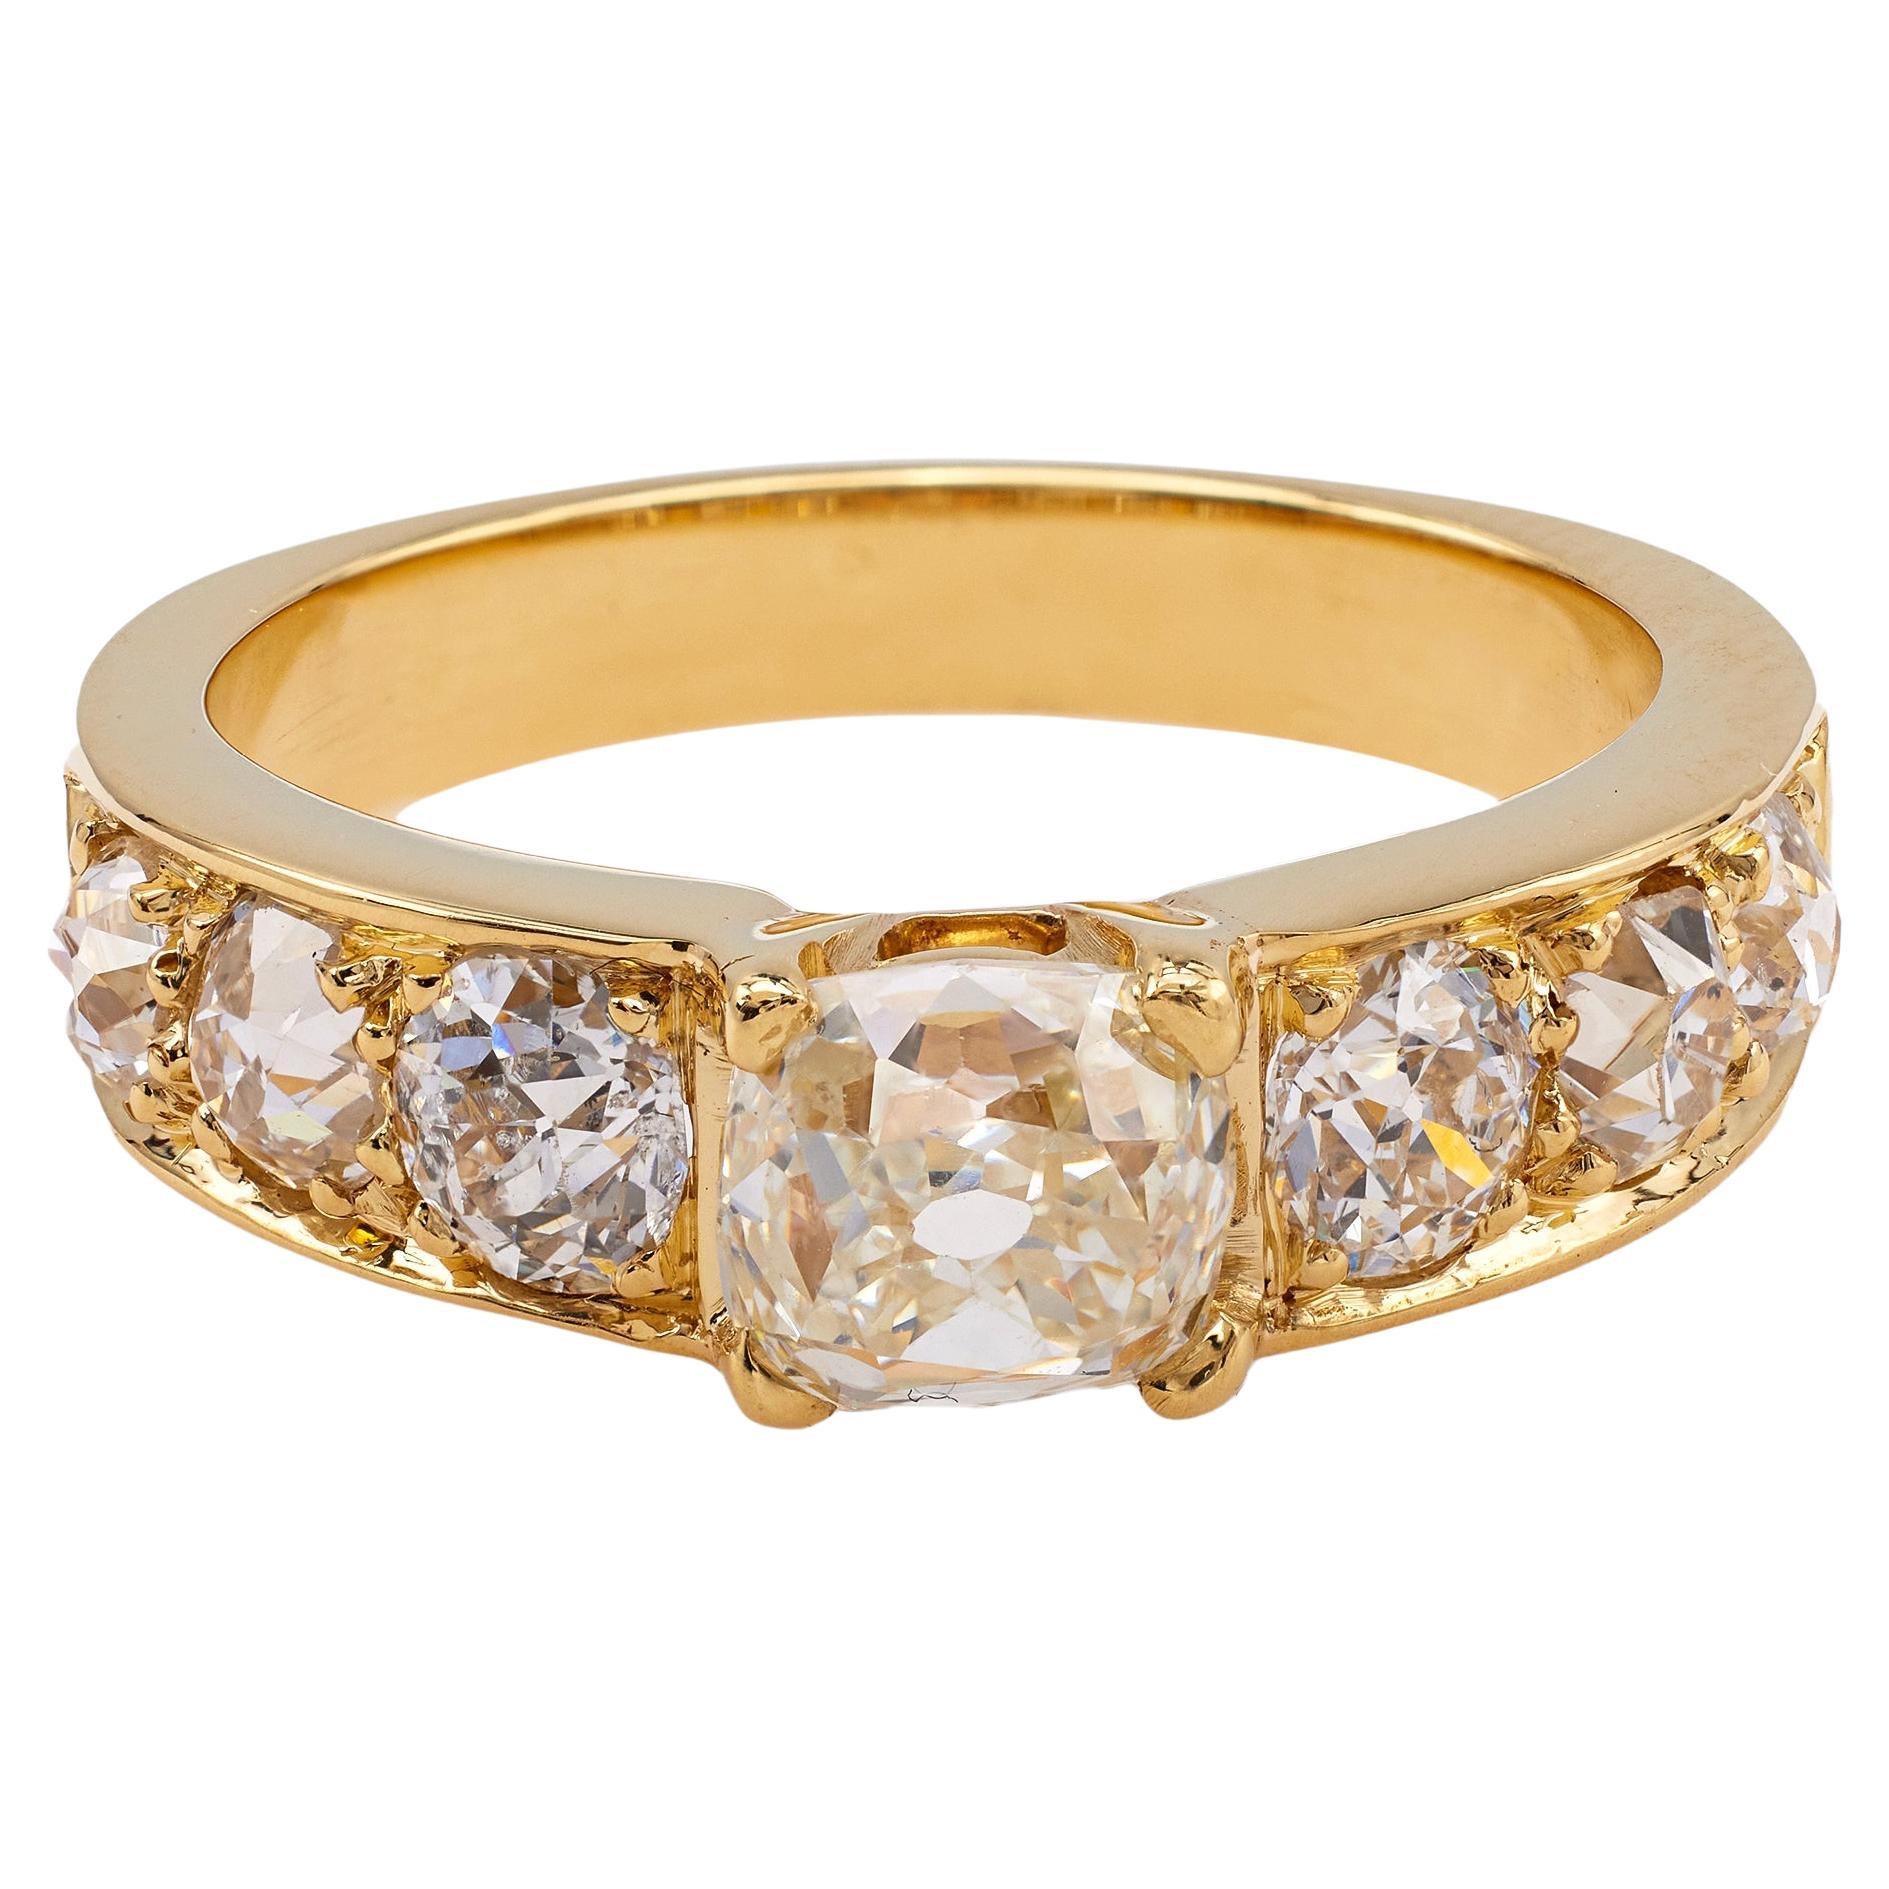 Vintage French GIA 1.15 Carat Old Mine Cut Diamond 18k Yellow Gold Ring